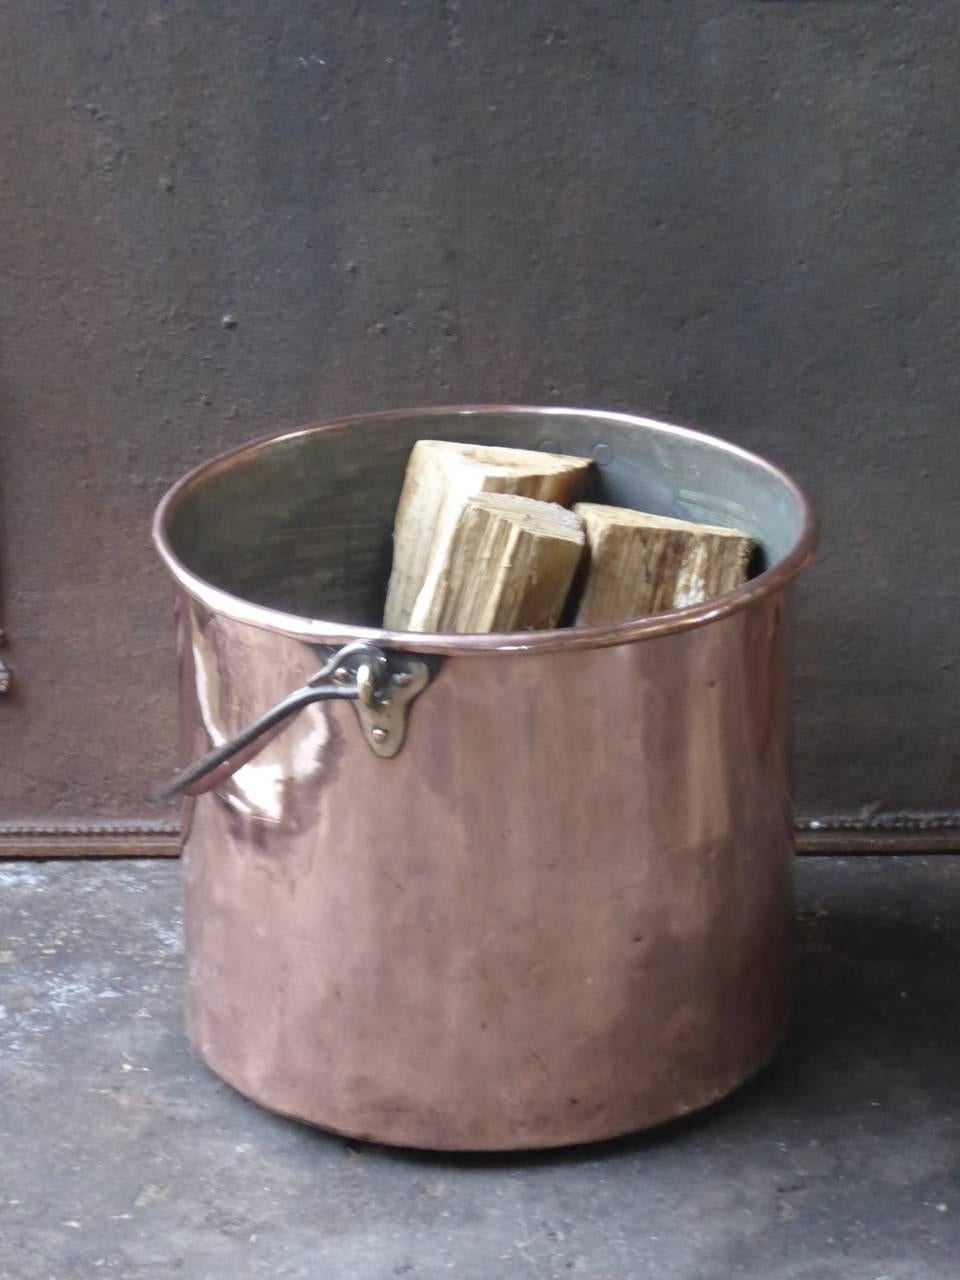 18th-19th century Dutch log bin - firewood holder made of polished copper.